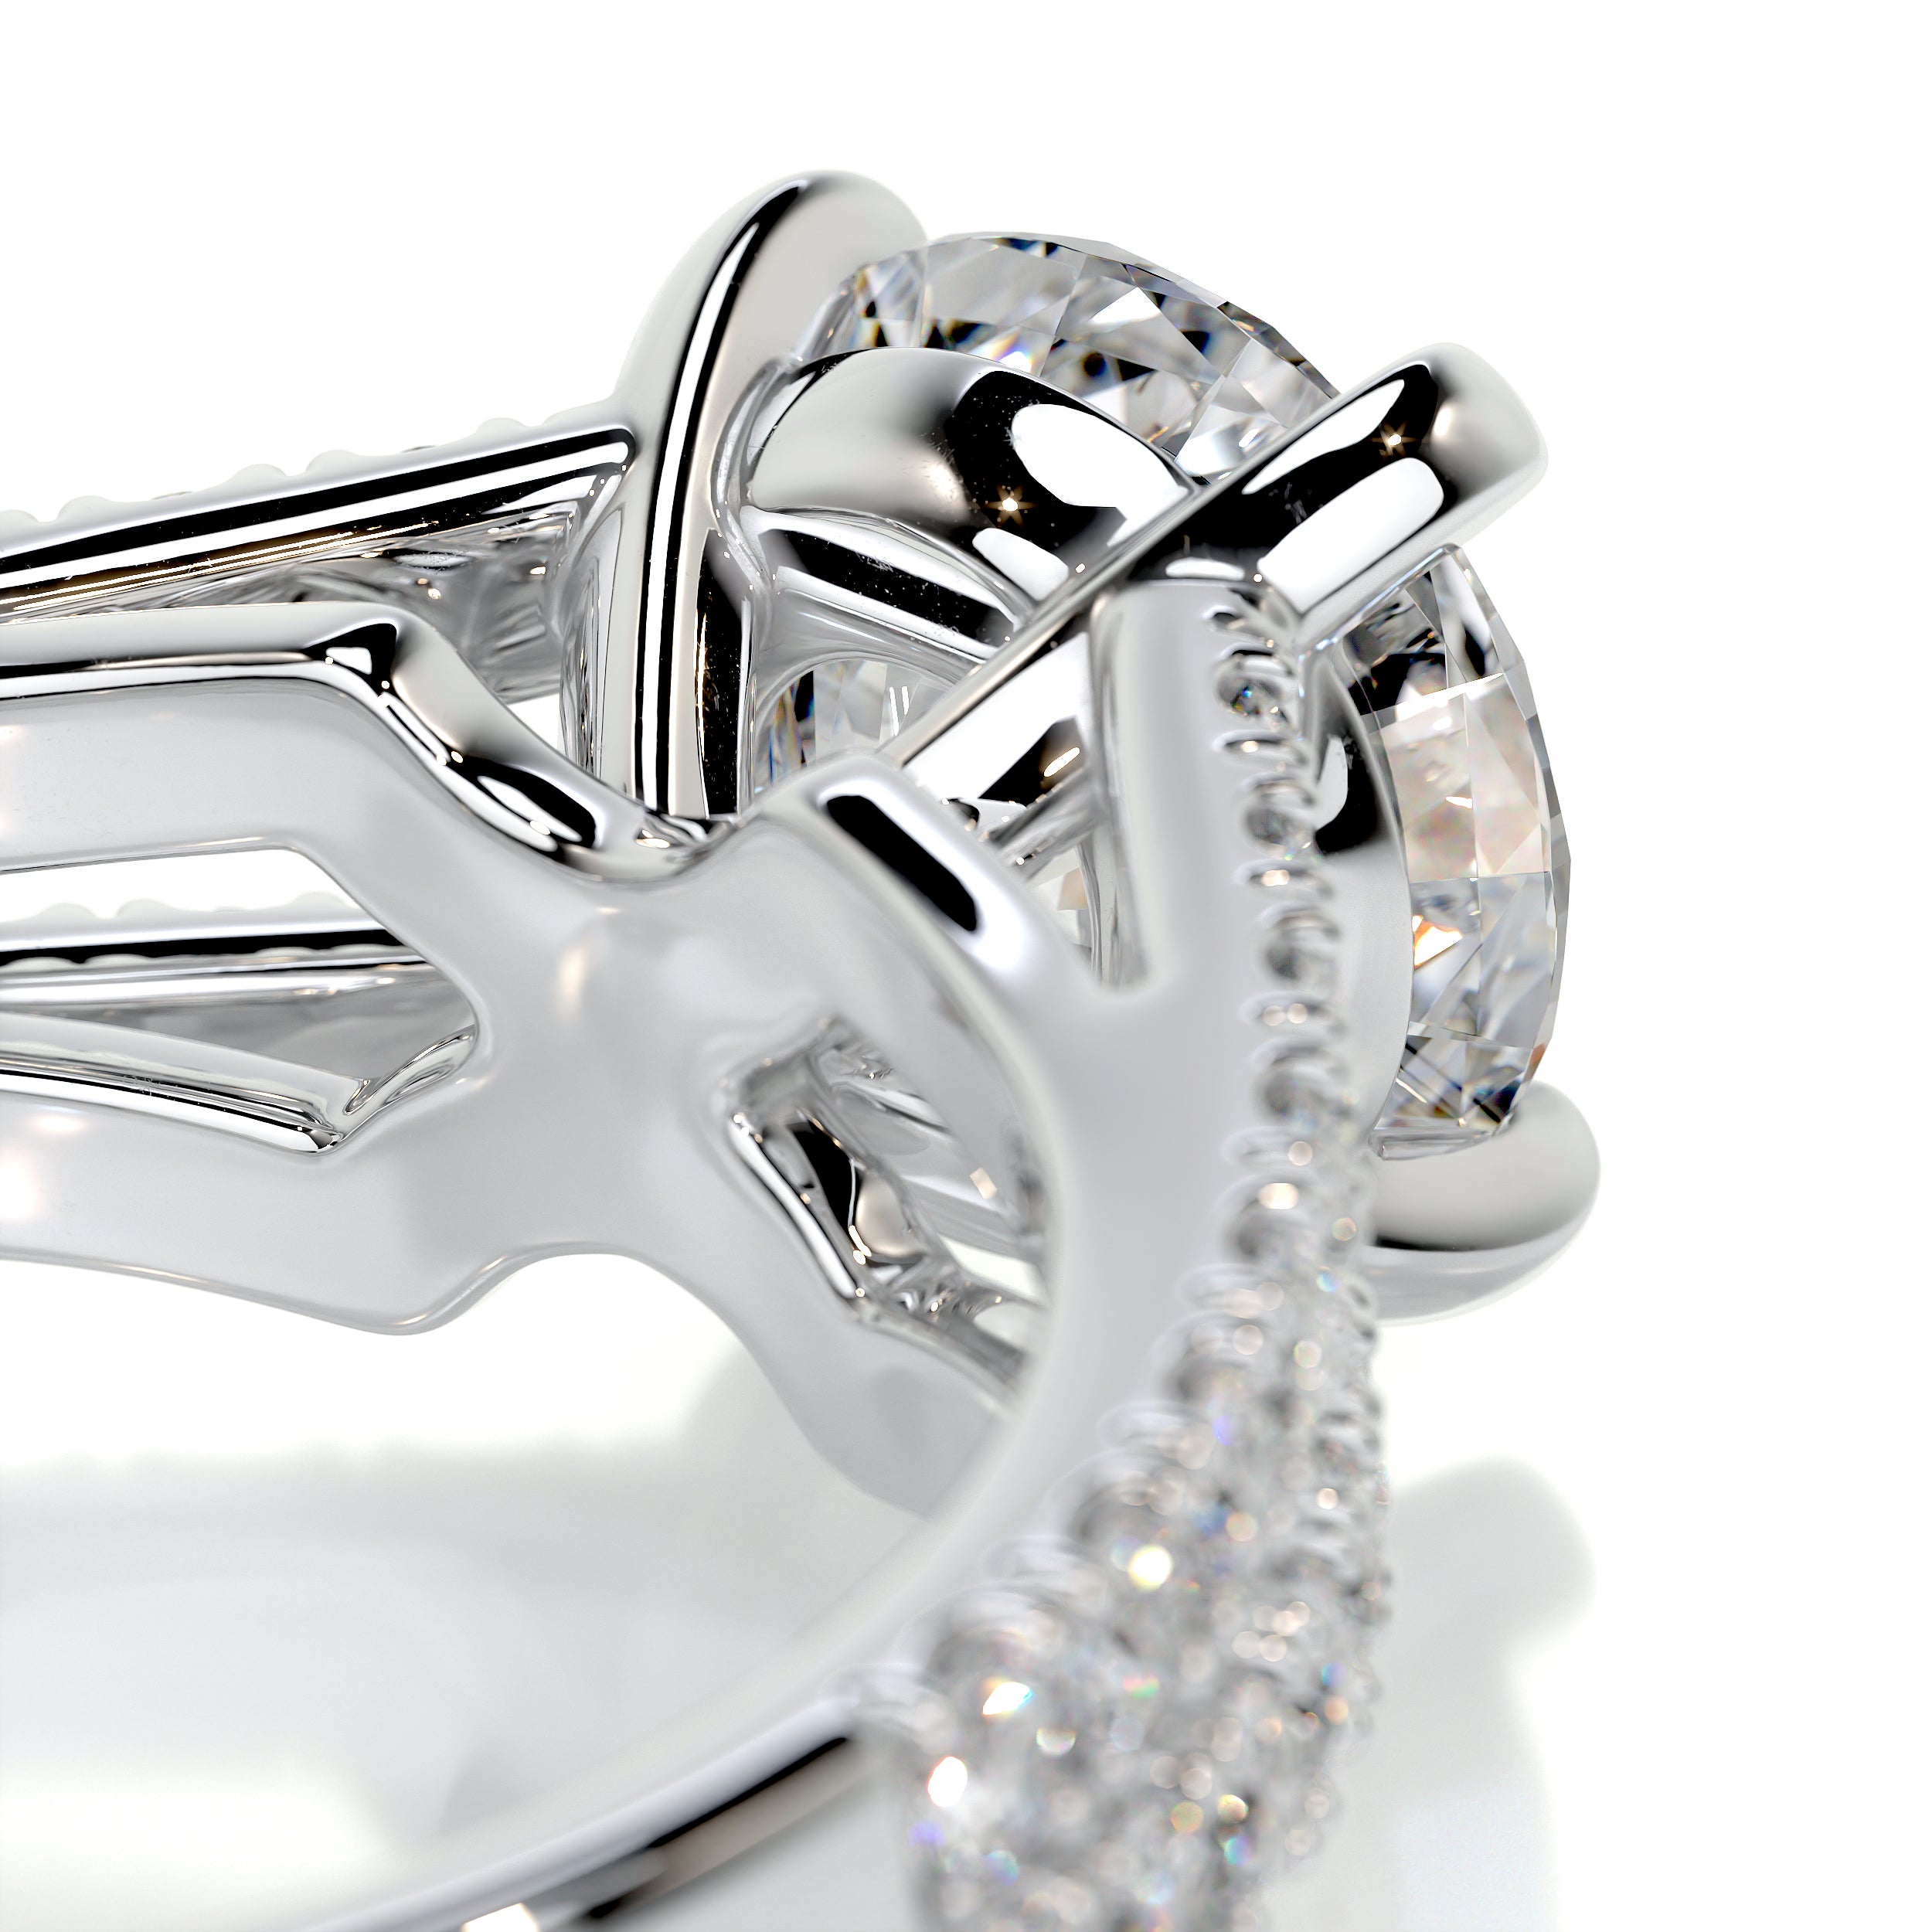 Sadie Diamond Engagement Ring   (2 Carat) -Platinum